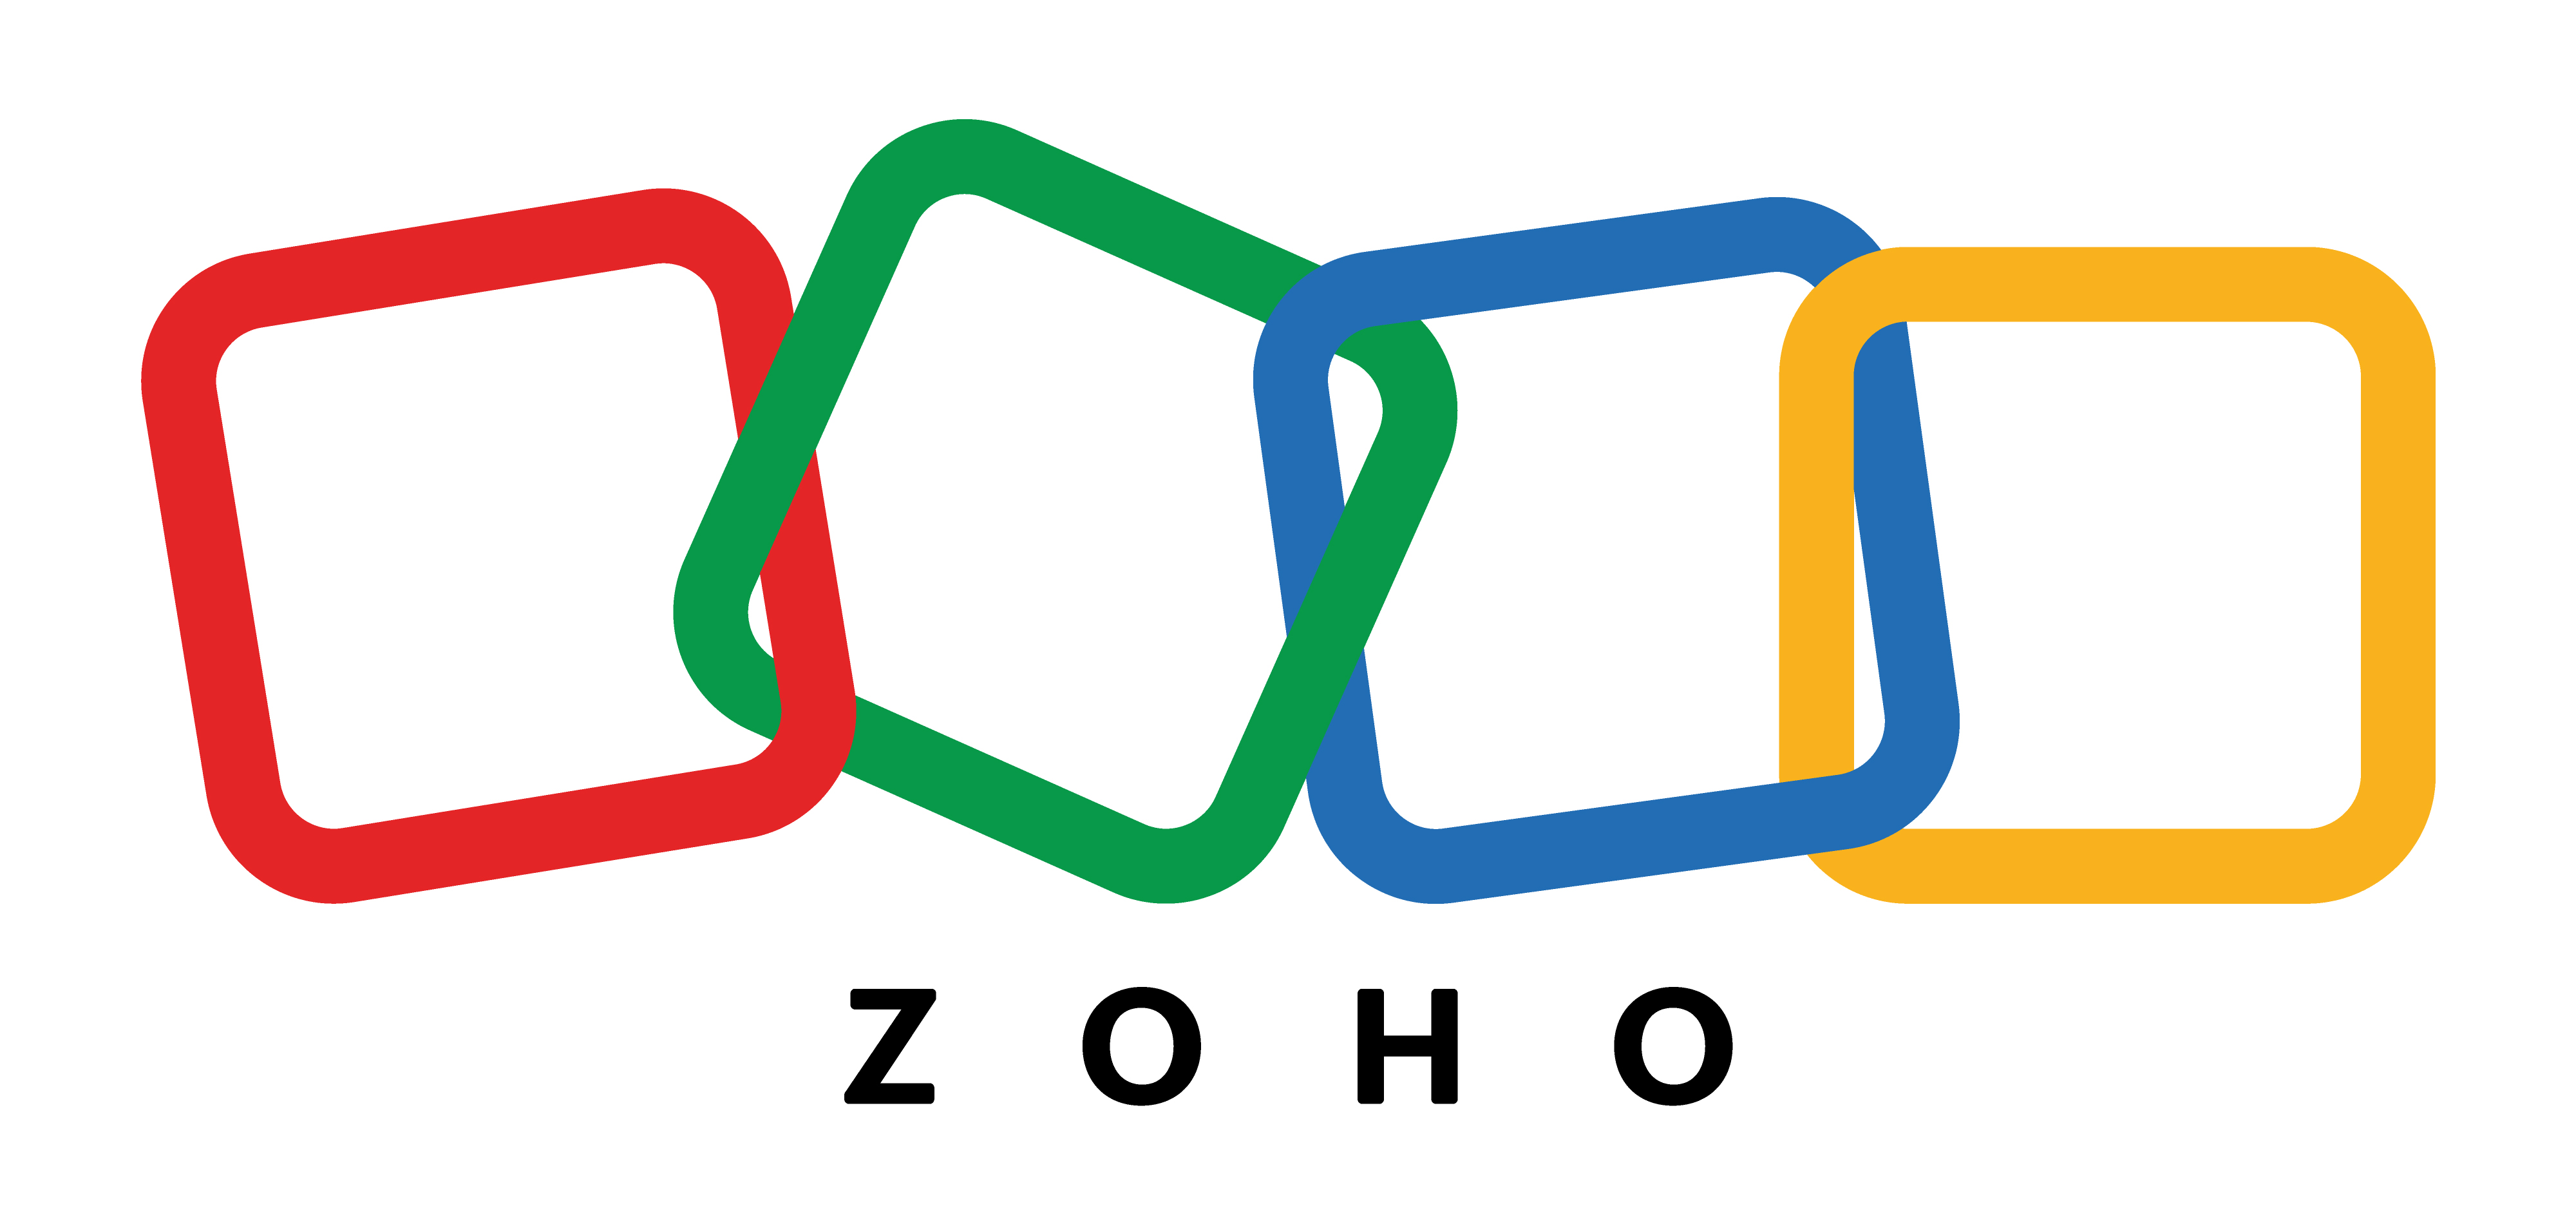 ViewWebformLogo.do?from=outside&module=CustomModule3&id=2803000506006760&name=Zoho Logo 